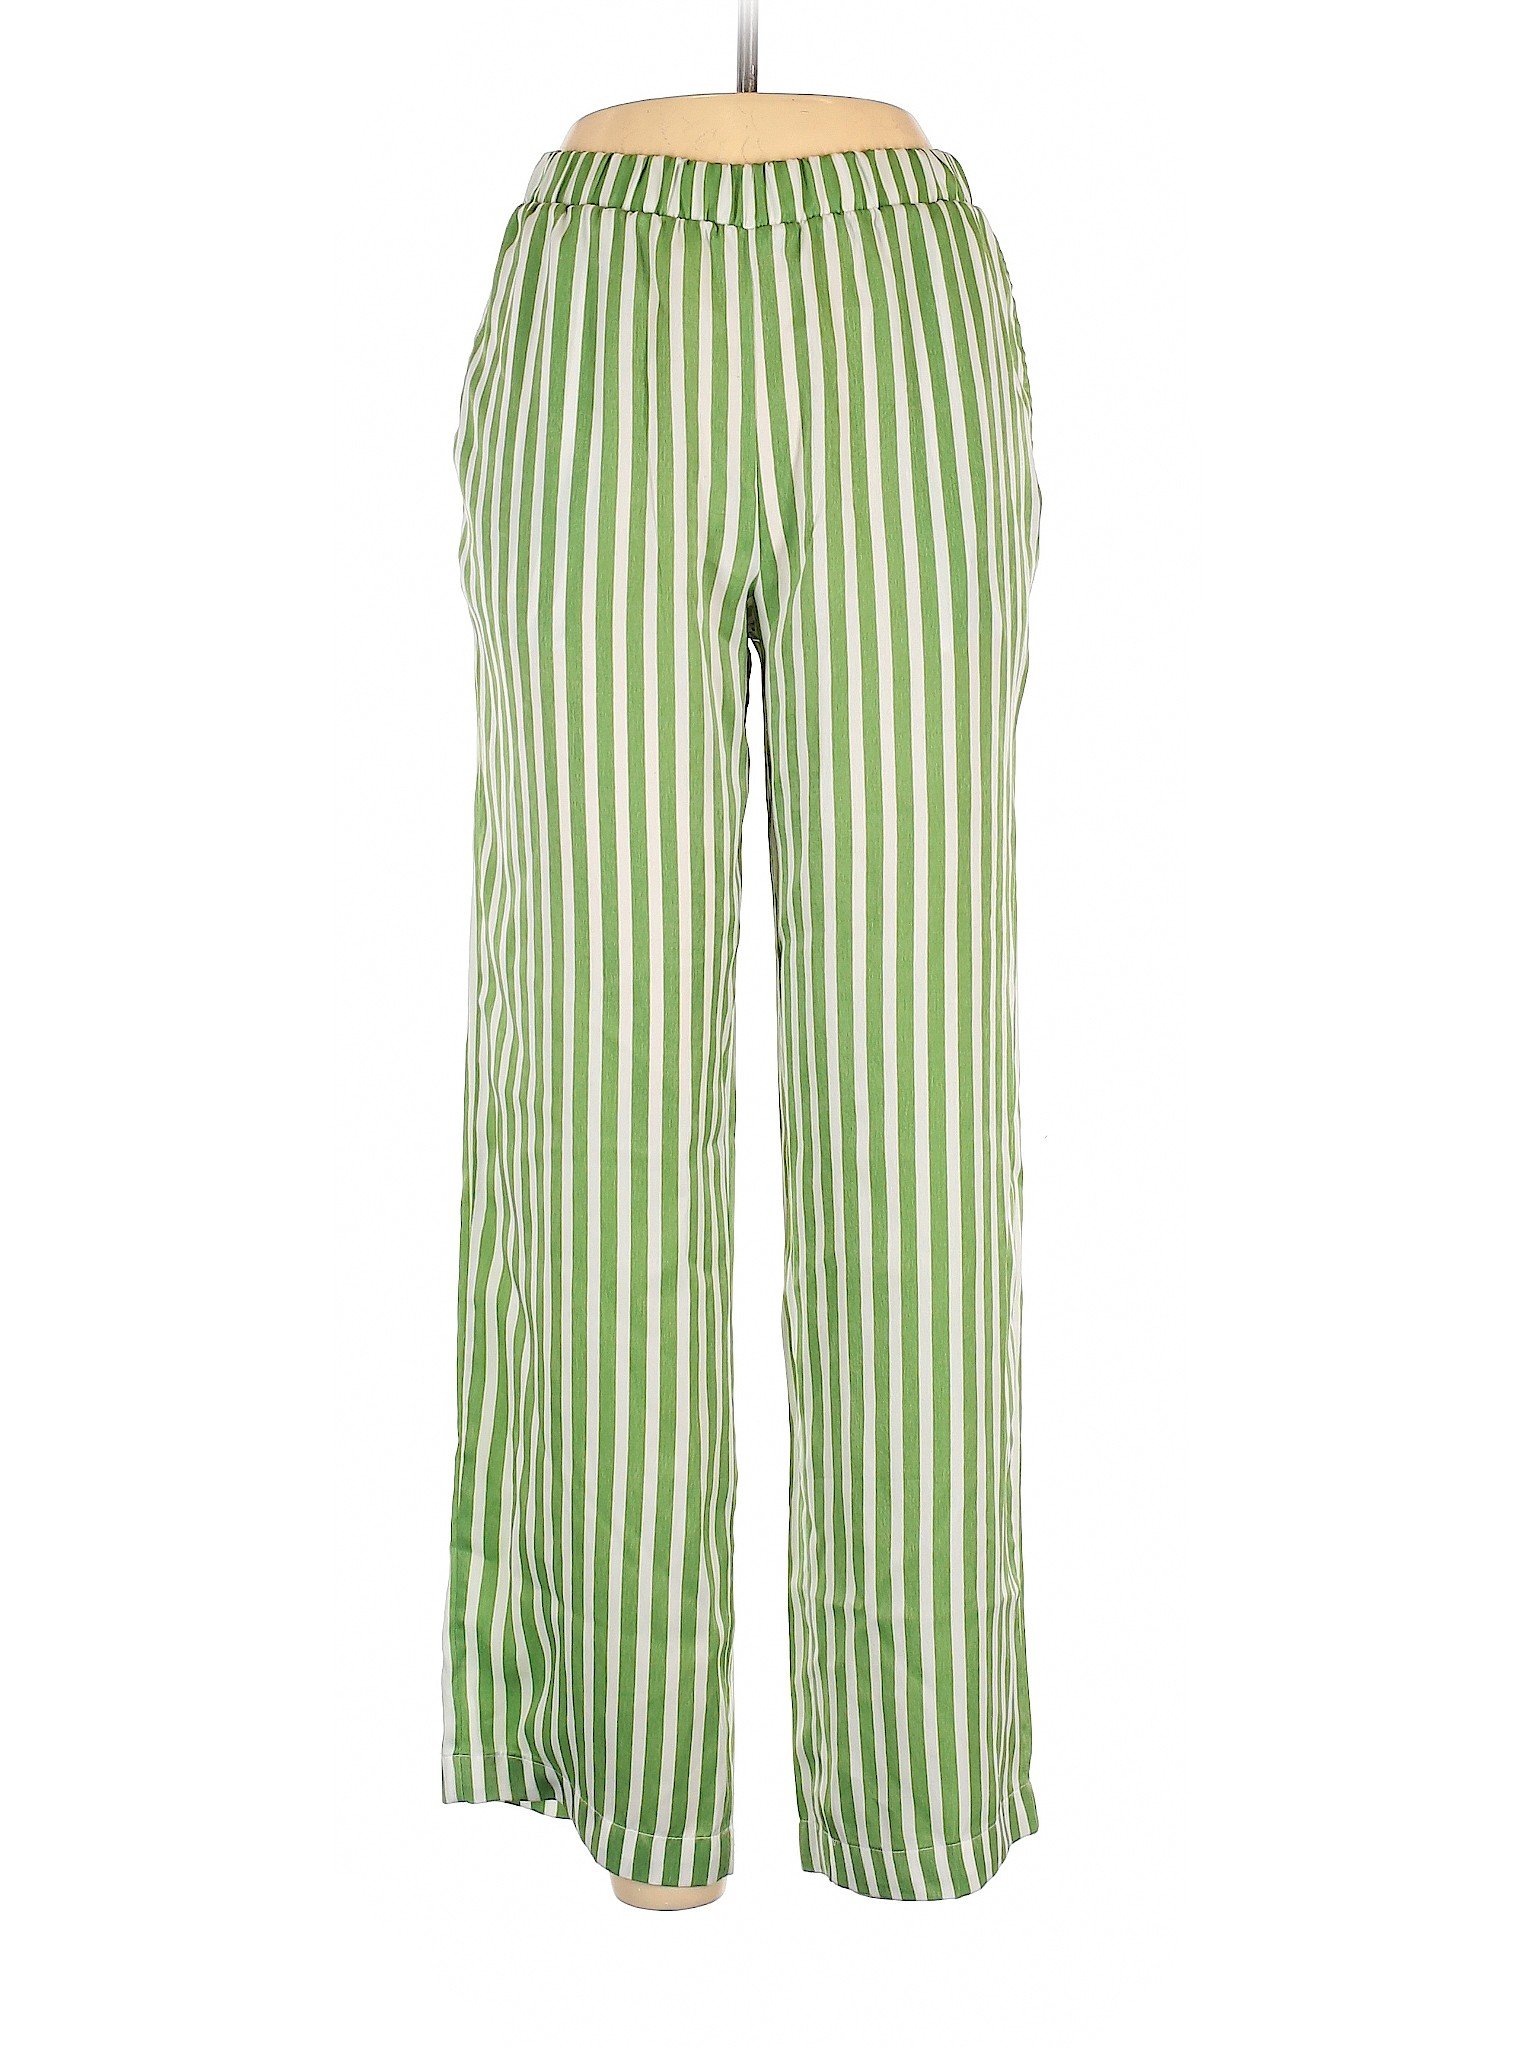 Forever 21 Women Green Casual Pants M | eBay